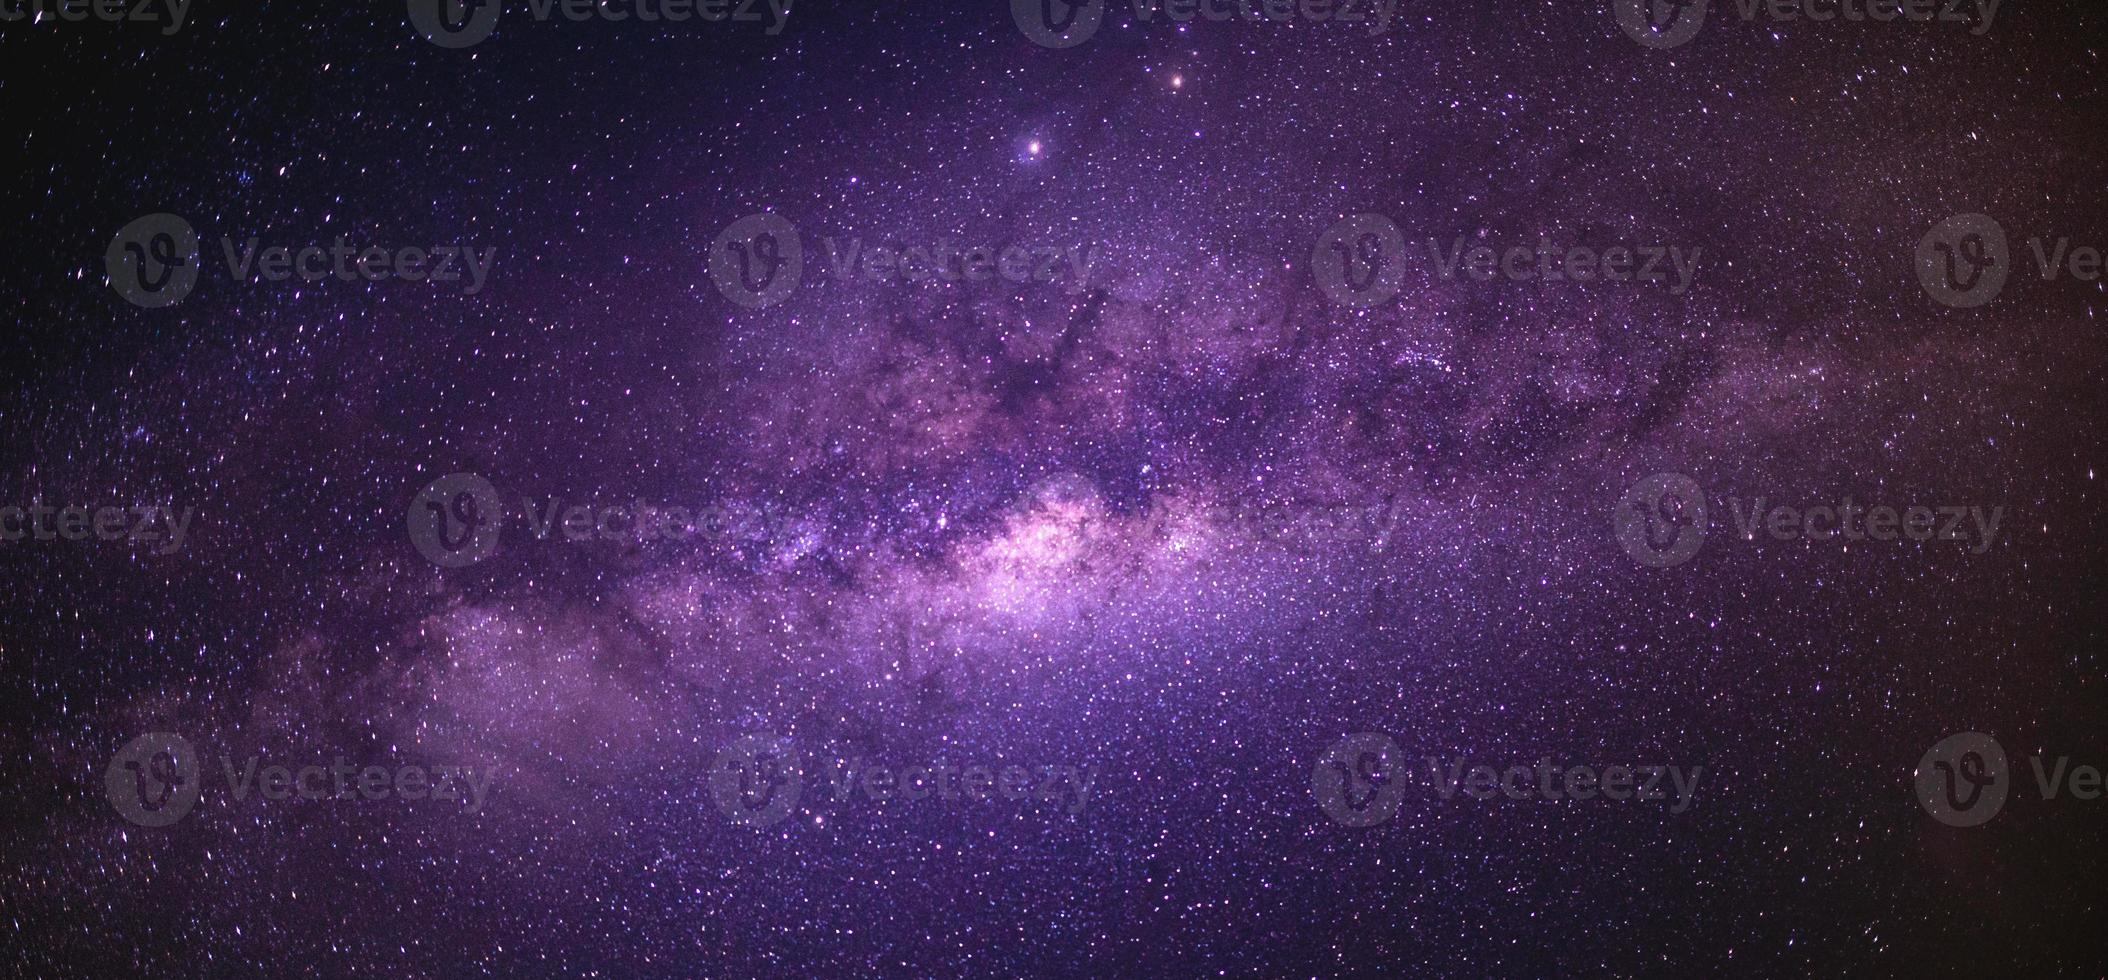 Landscape with Milky way galaxy. Night sky with stars. photo